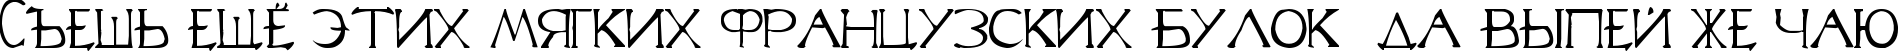 Пример написания шрифтом Lineage 2 Font текста на русском